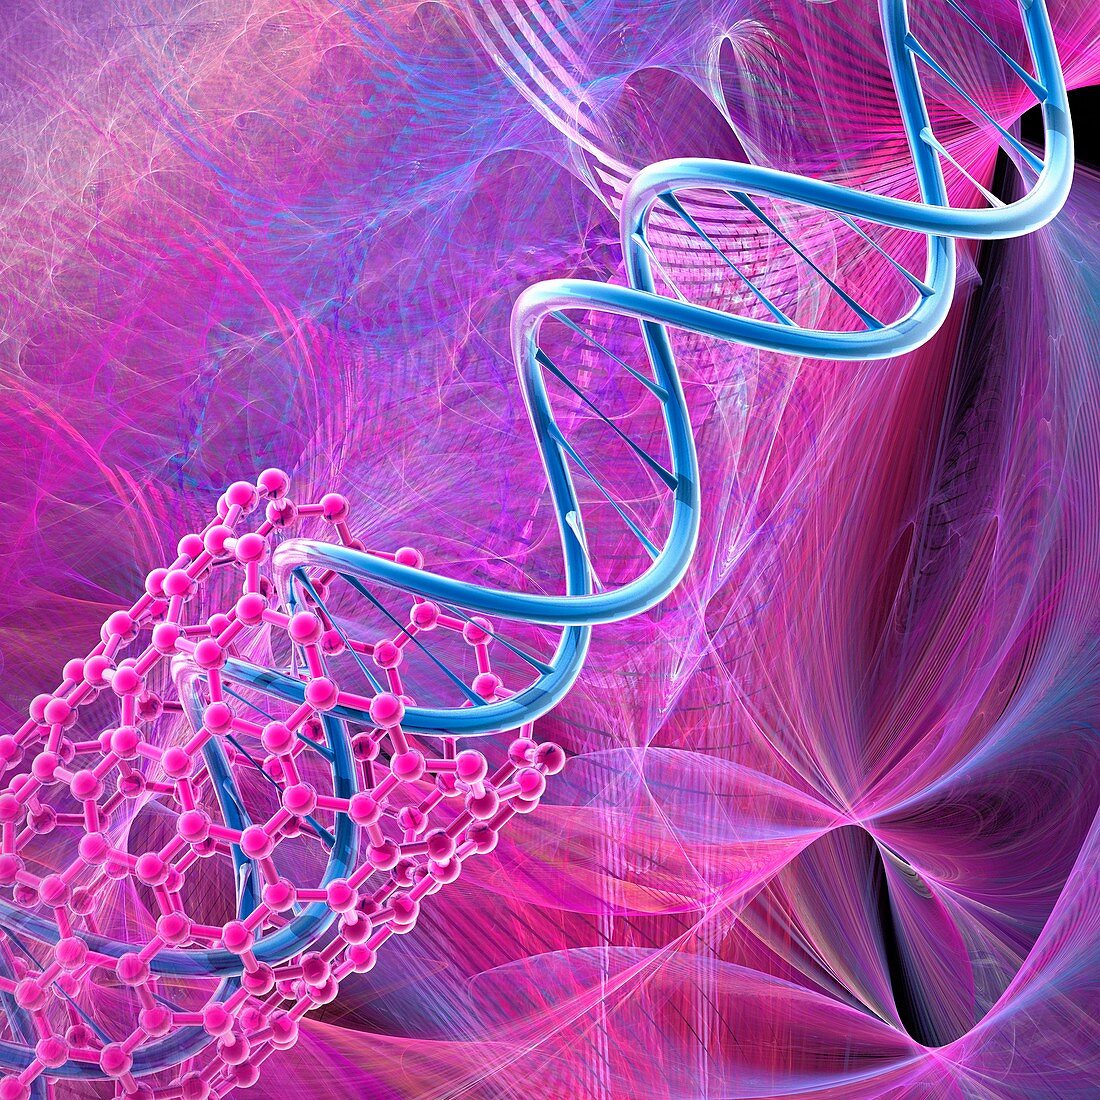 DNA molecule and nanotube, illustration